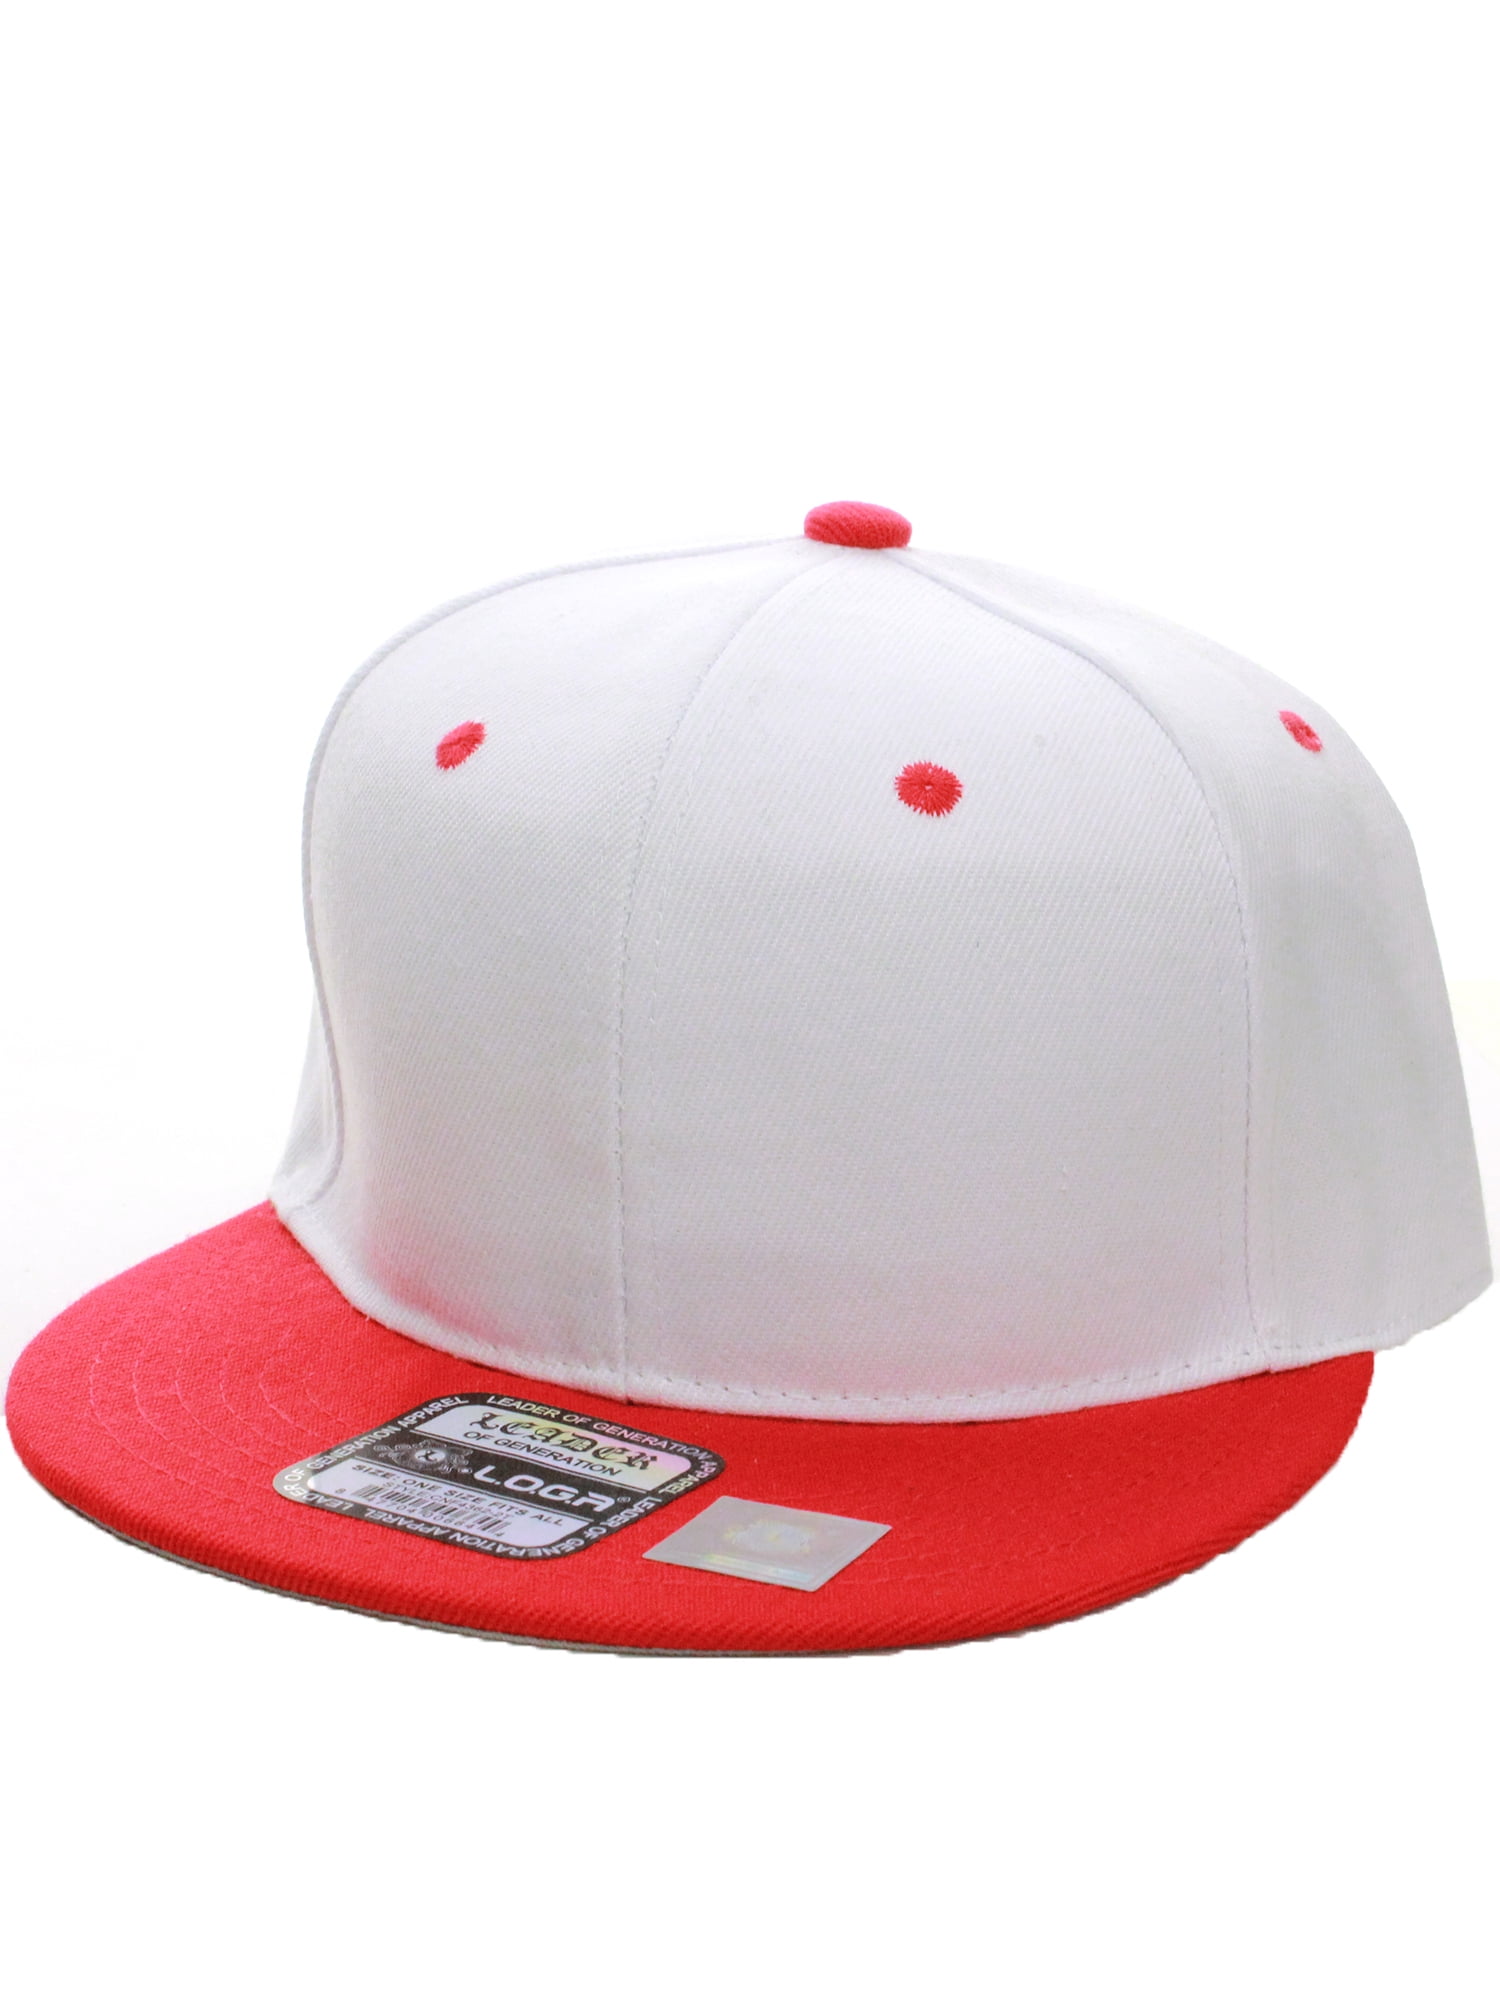 White Visor Red Bill Flat Adjustable - L.O.G.A. Hats Caps Snapback Plain